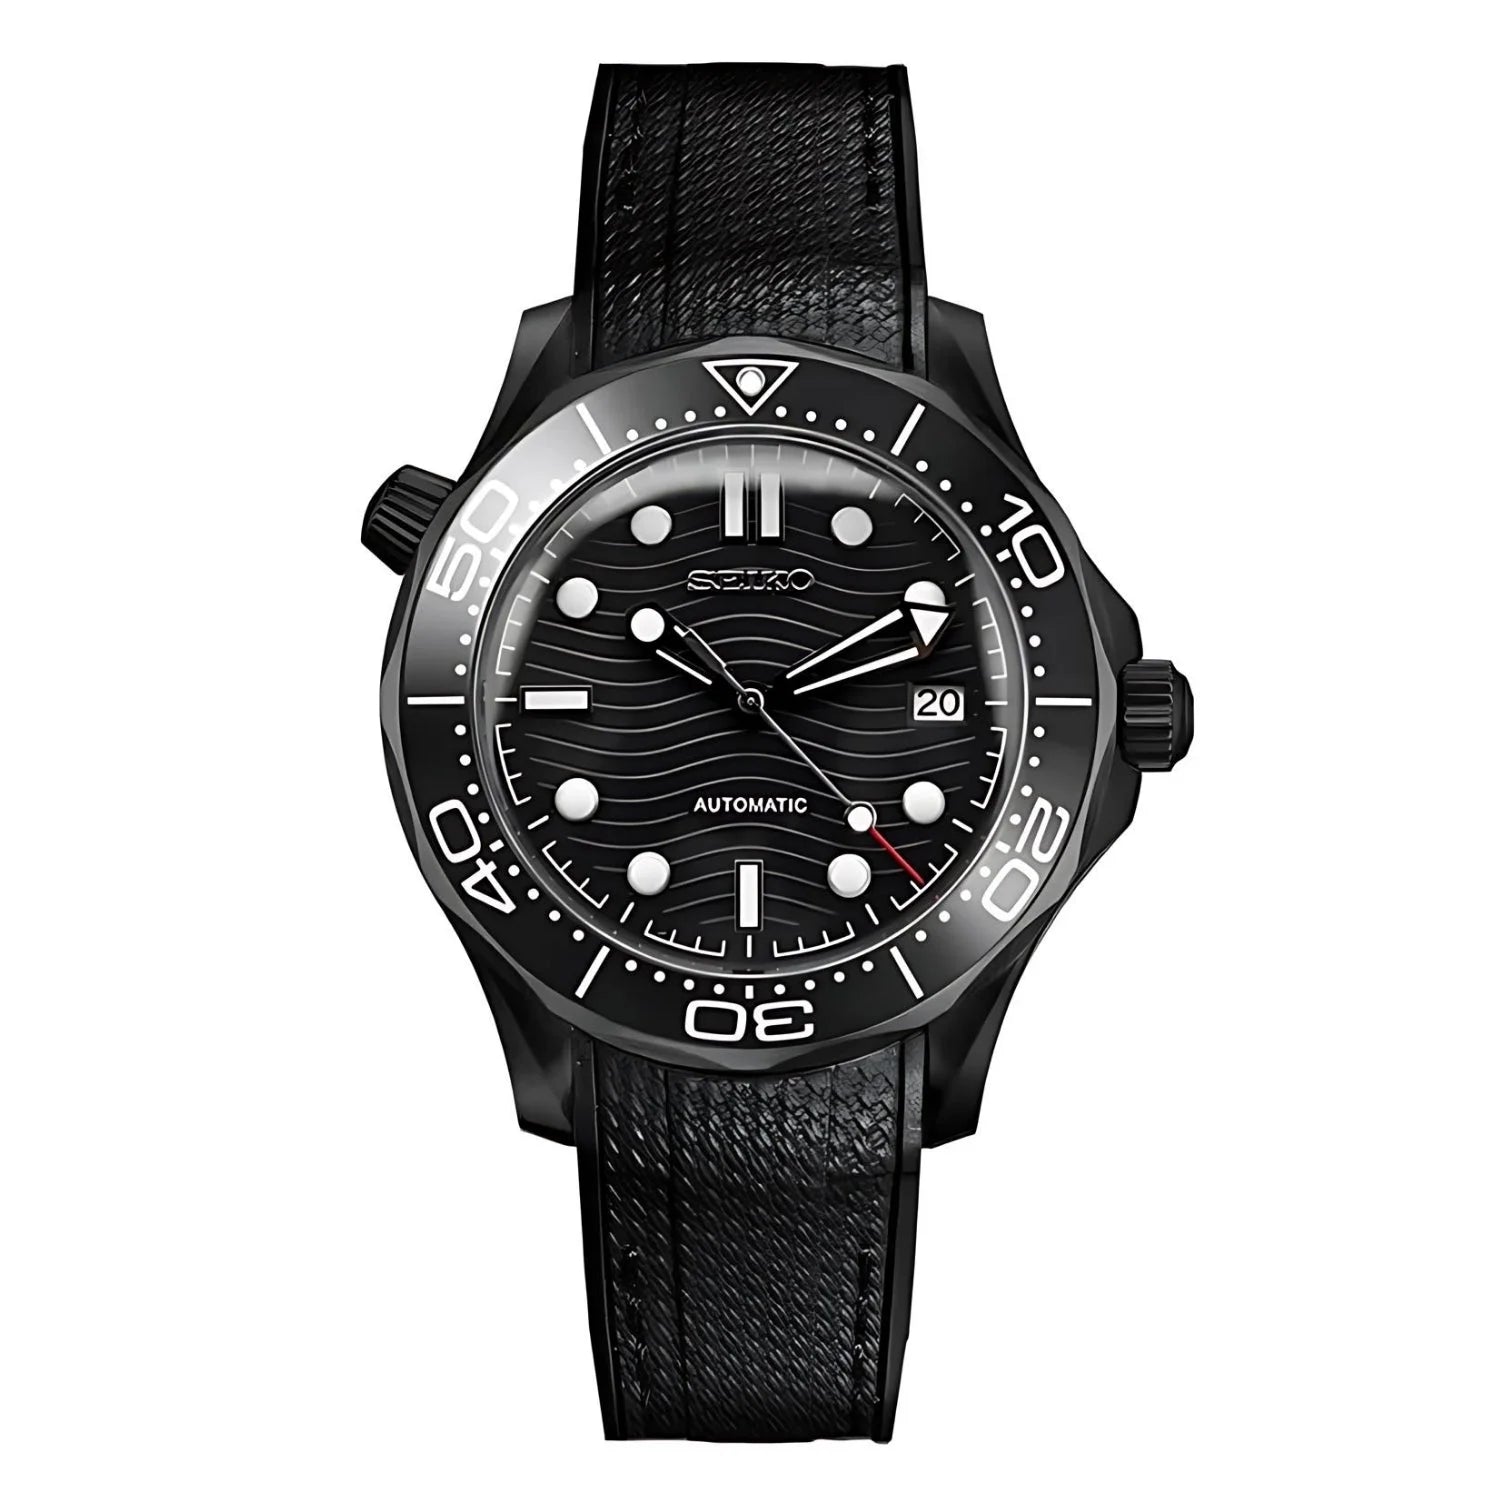 Black Seikomaster Full Black Dive Watch With Seiko Nh35 Automatic Movement